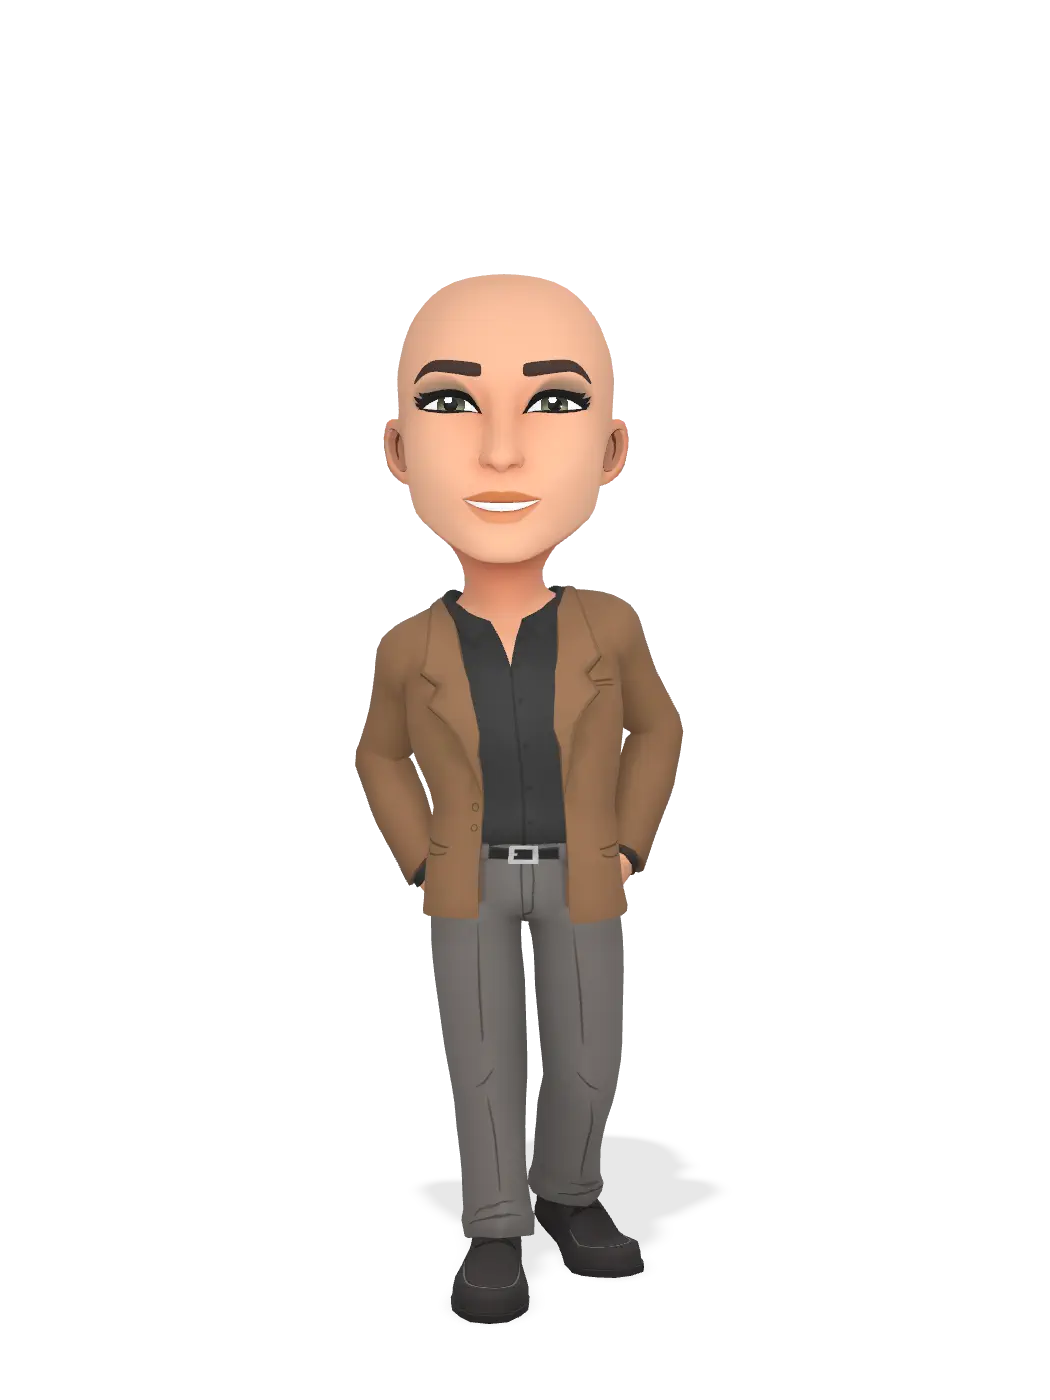 3D Bitmoji for xoomfurniture avatar